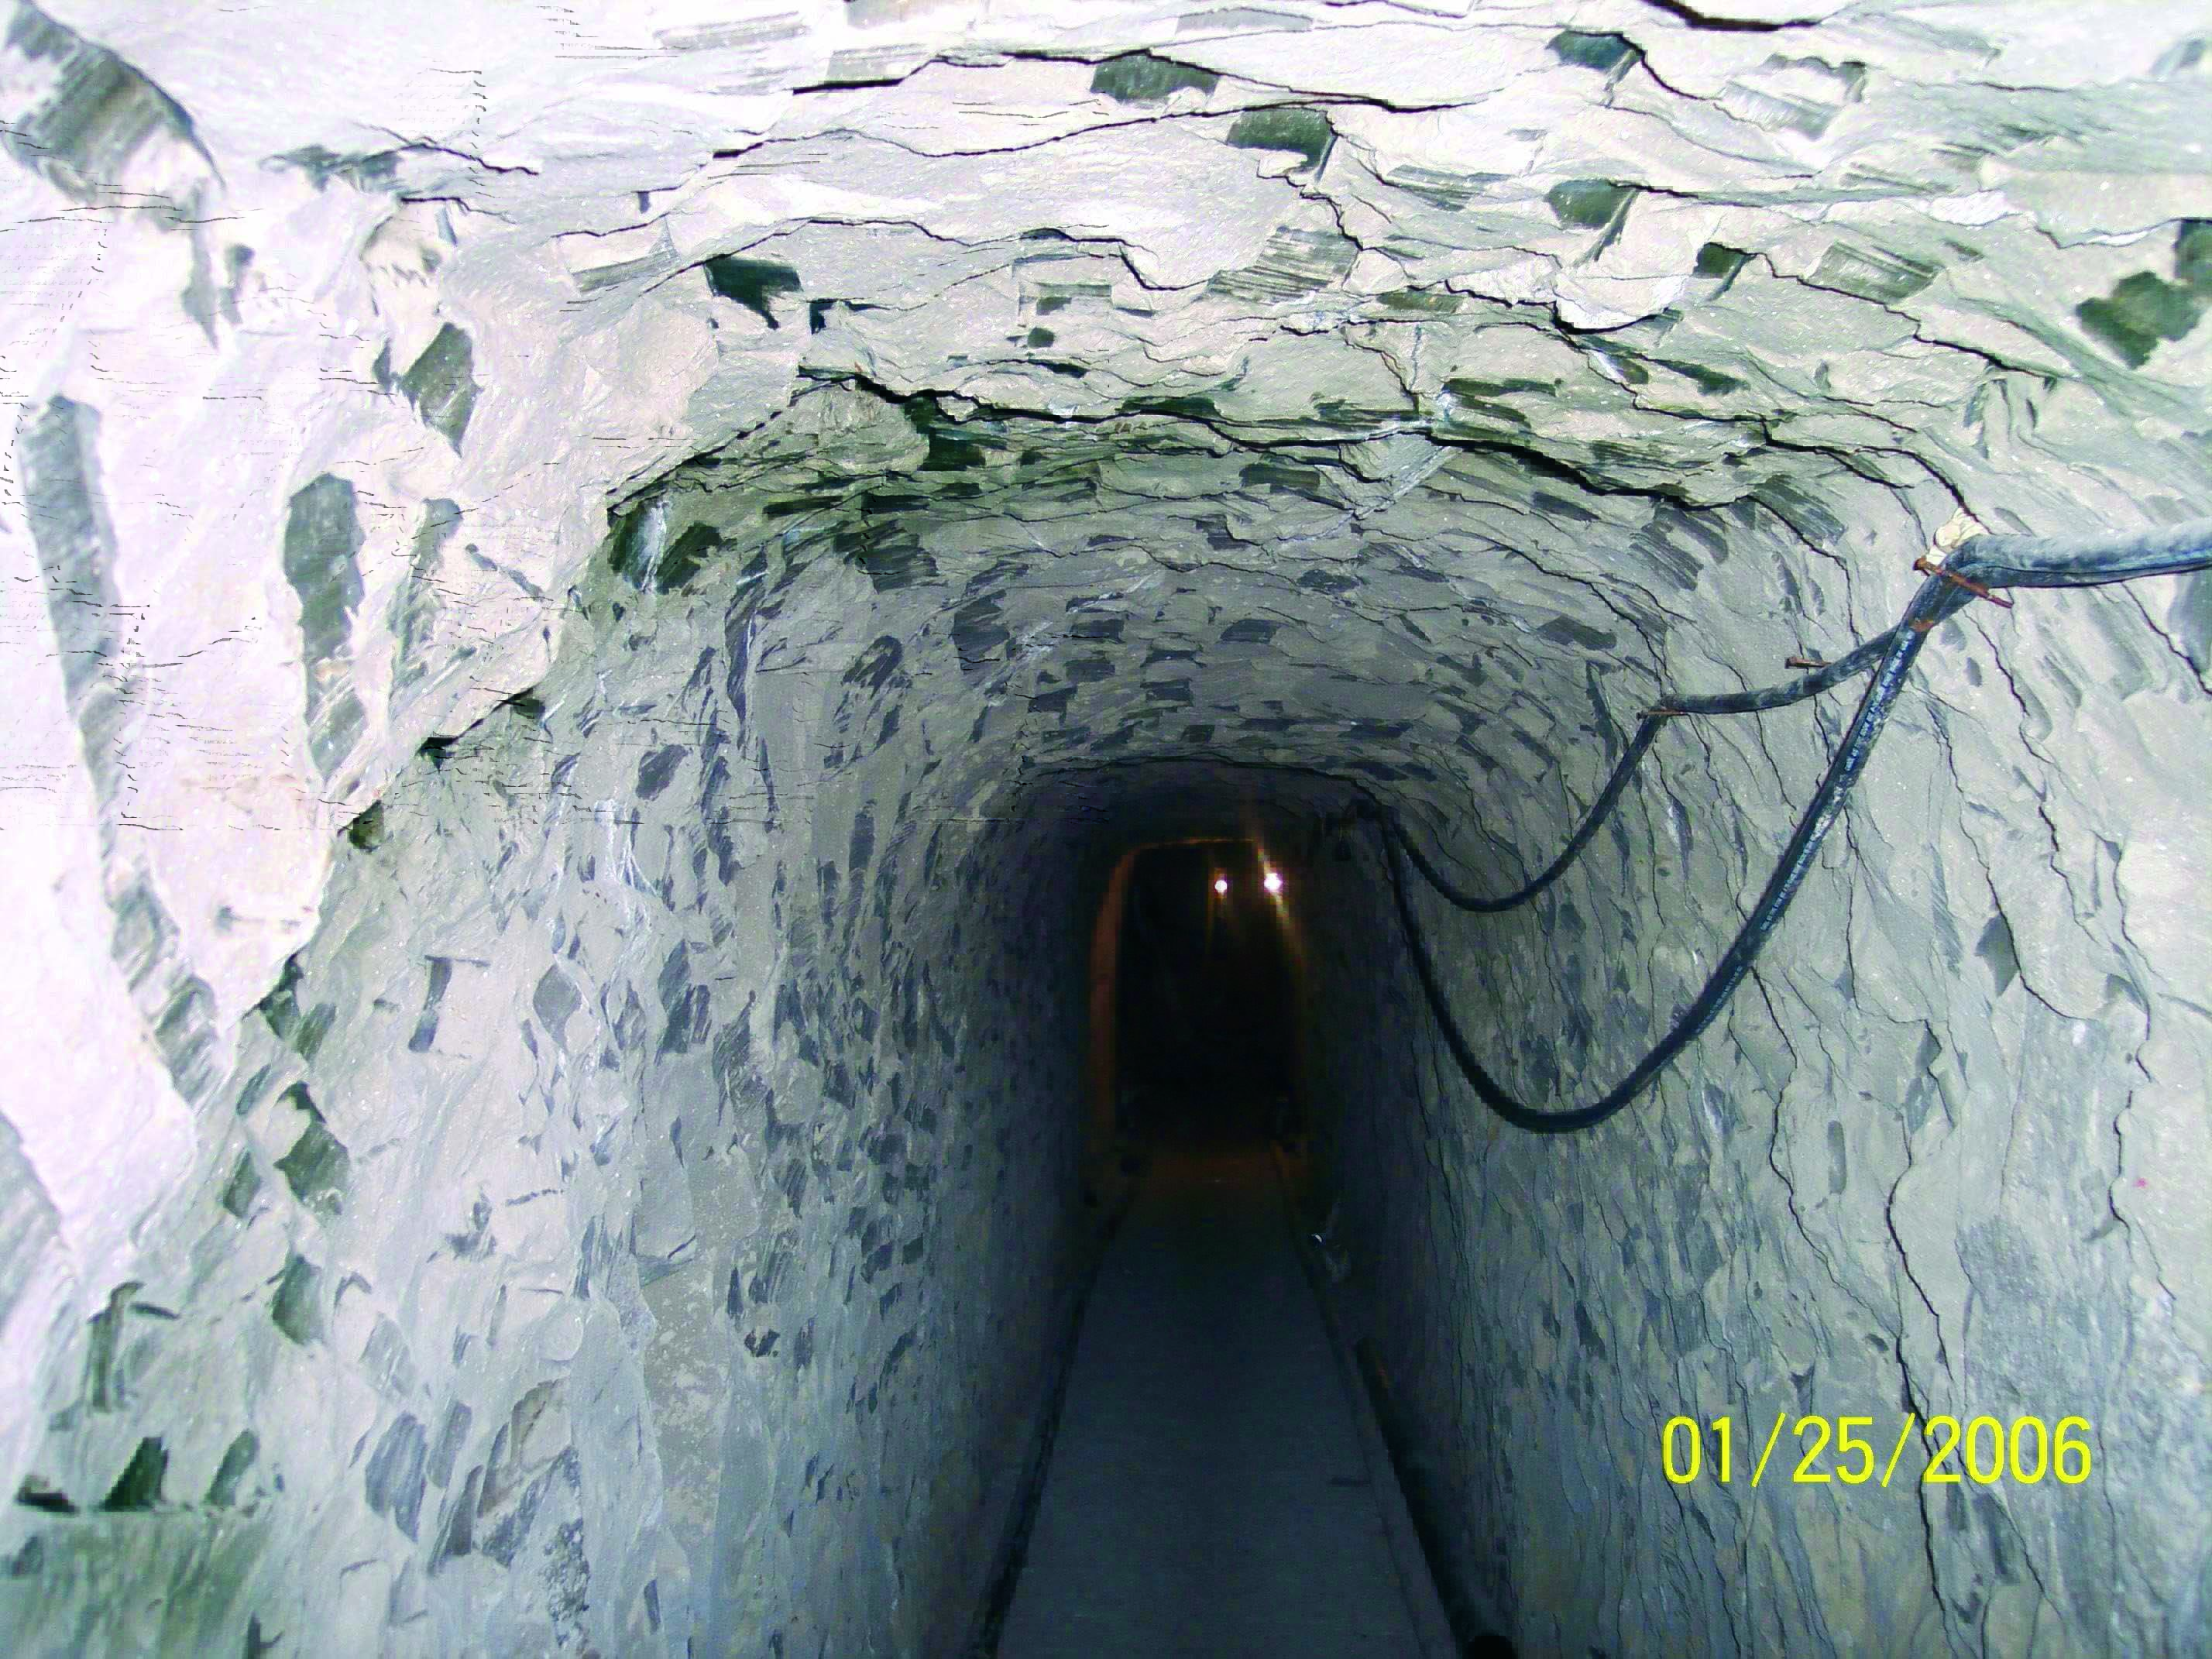 "Chapo" tiene 3 décadas de construir túneles: EU